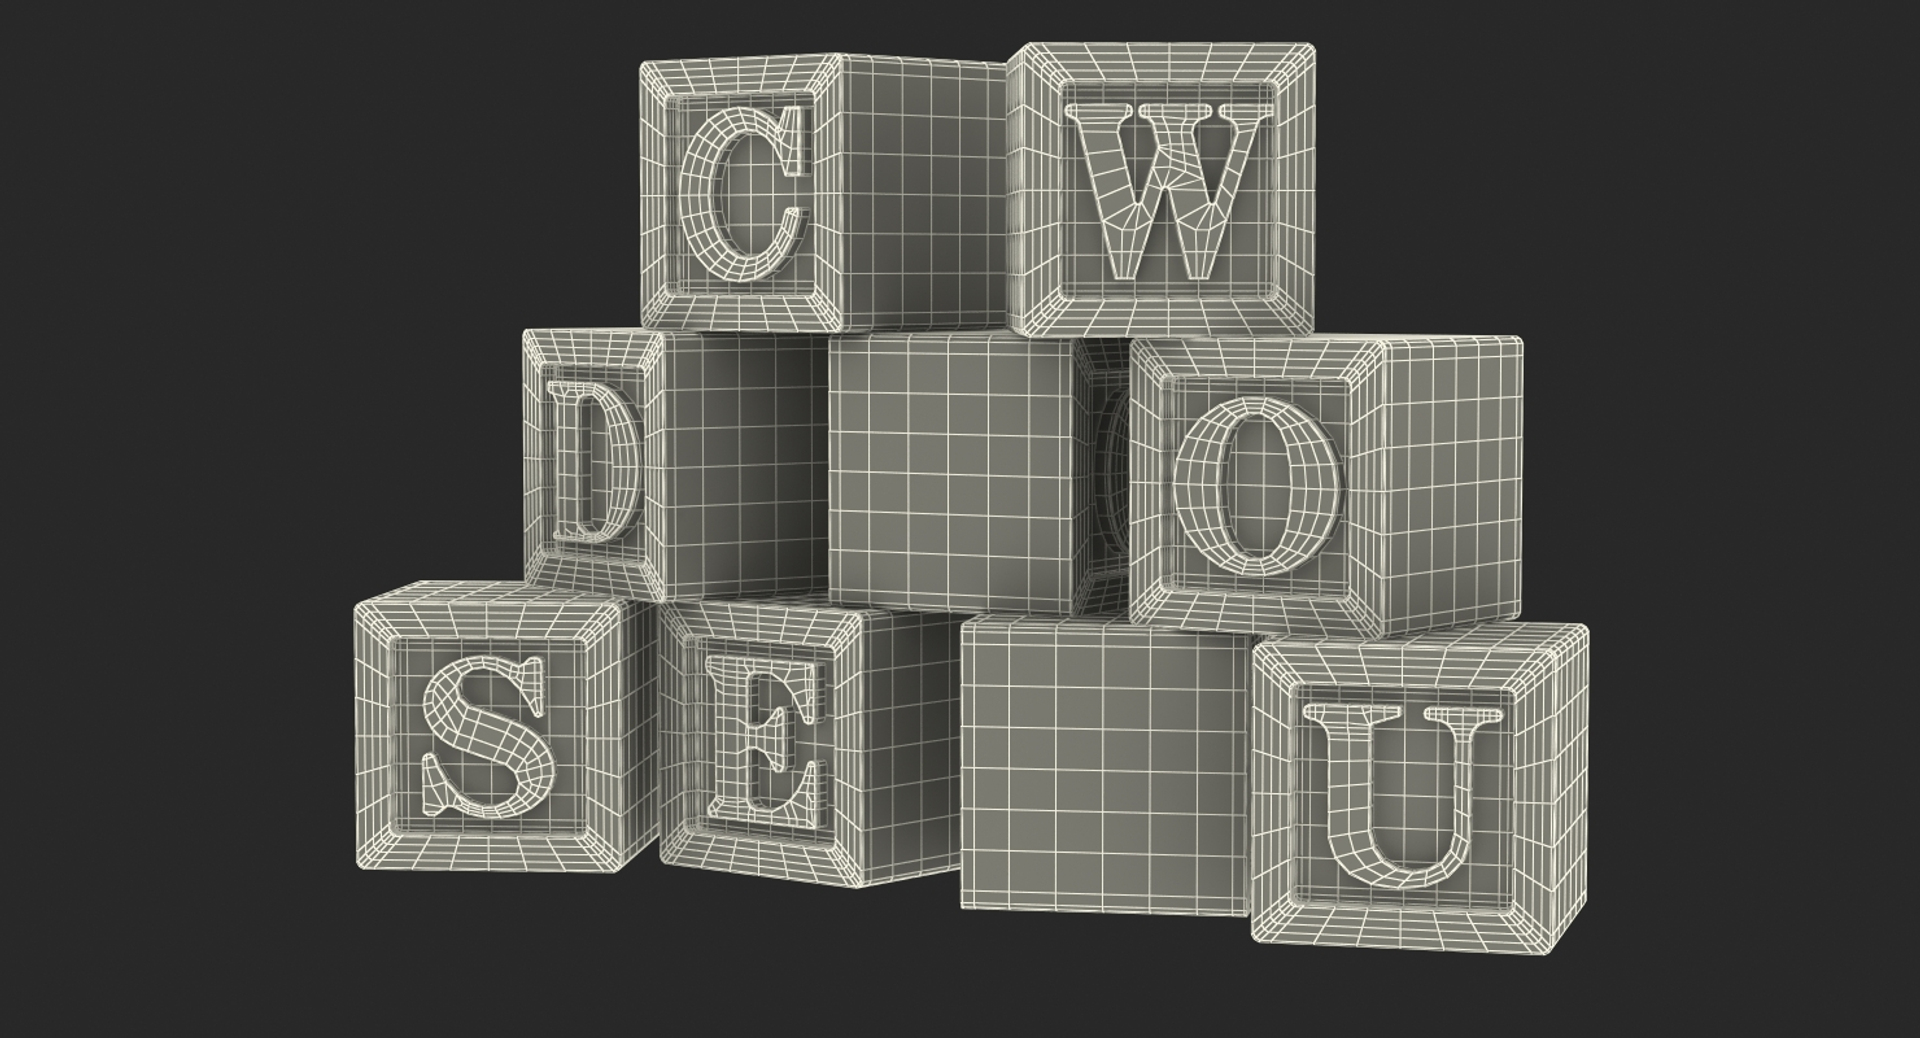 3D wooden letter blocks model - TurboSquid 1341314